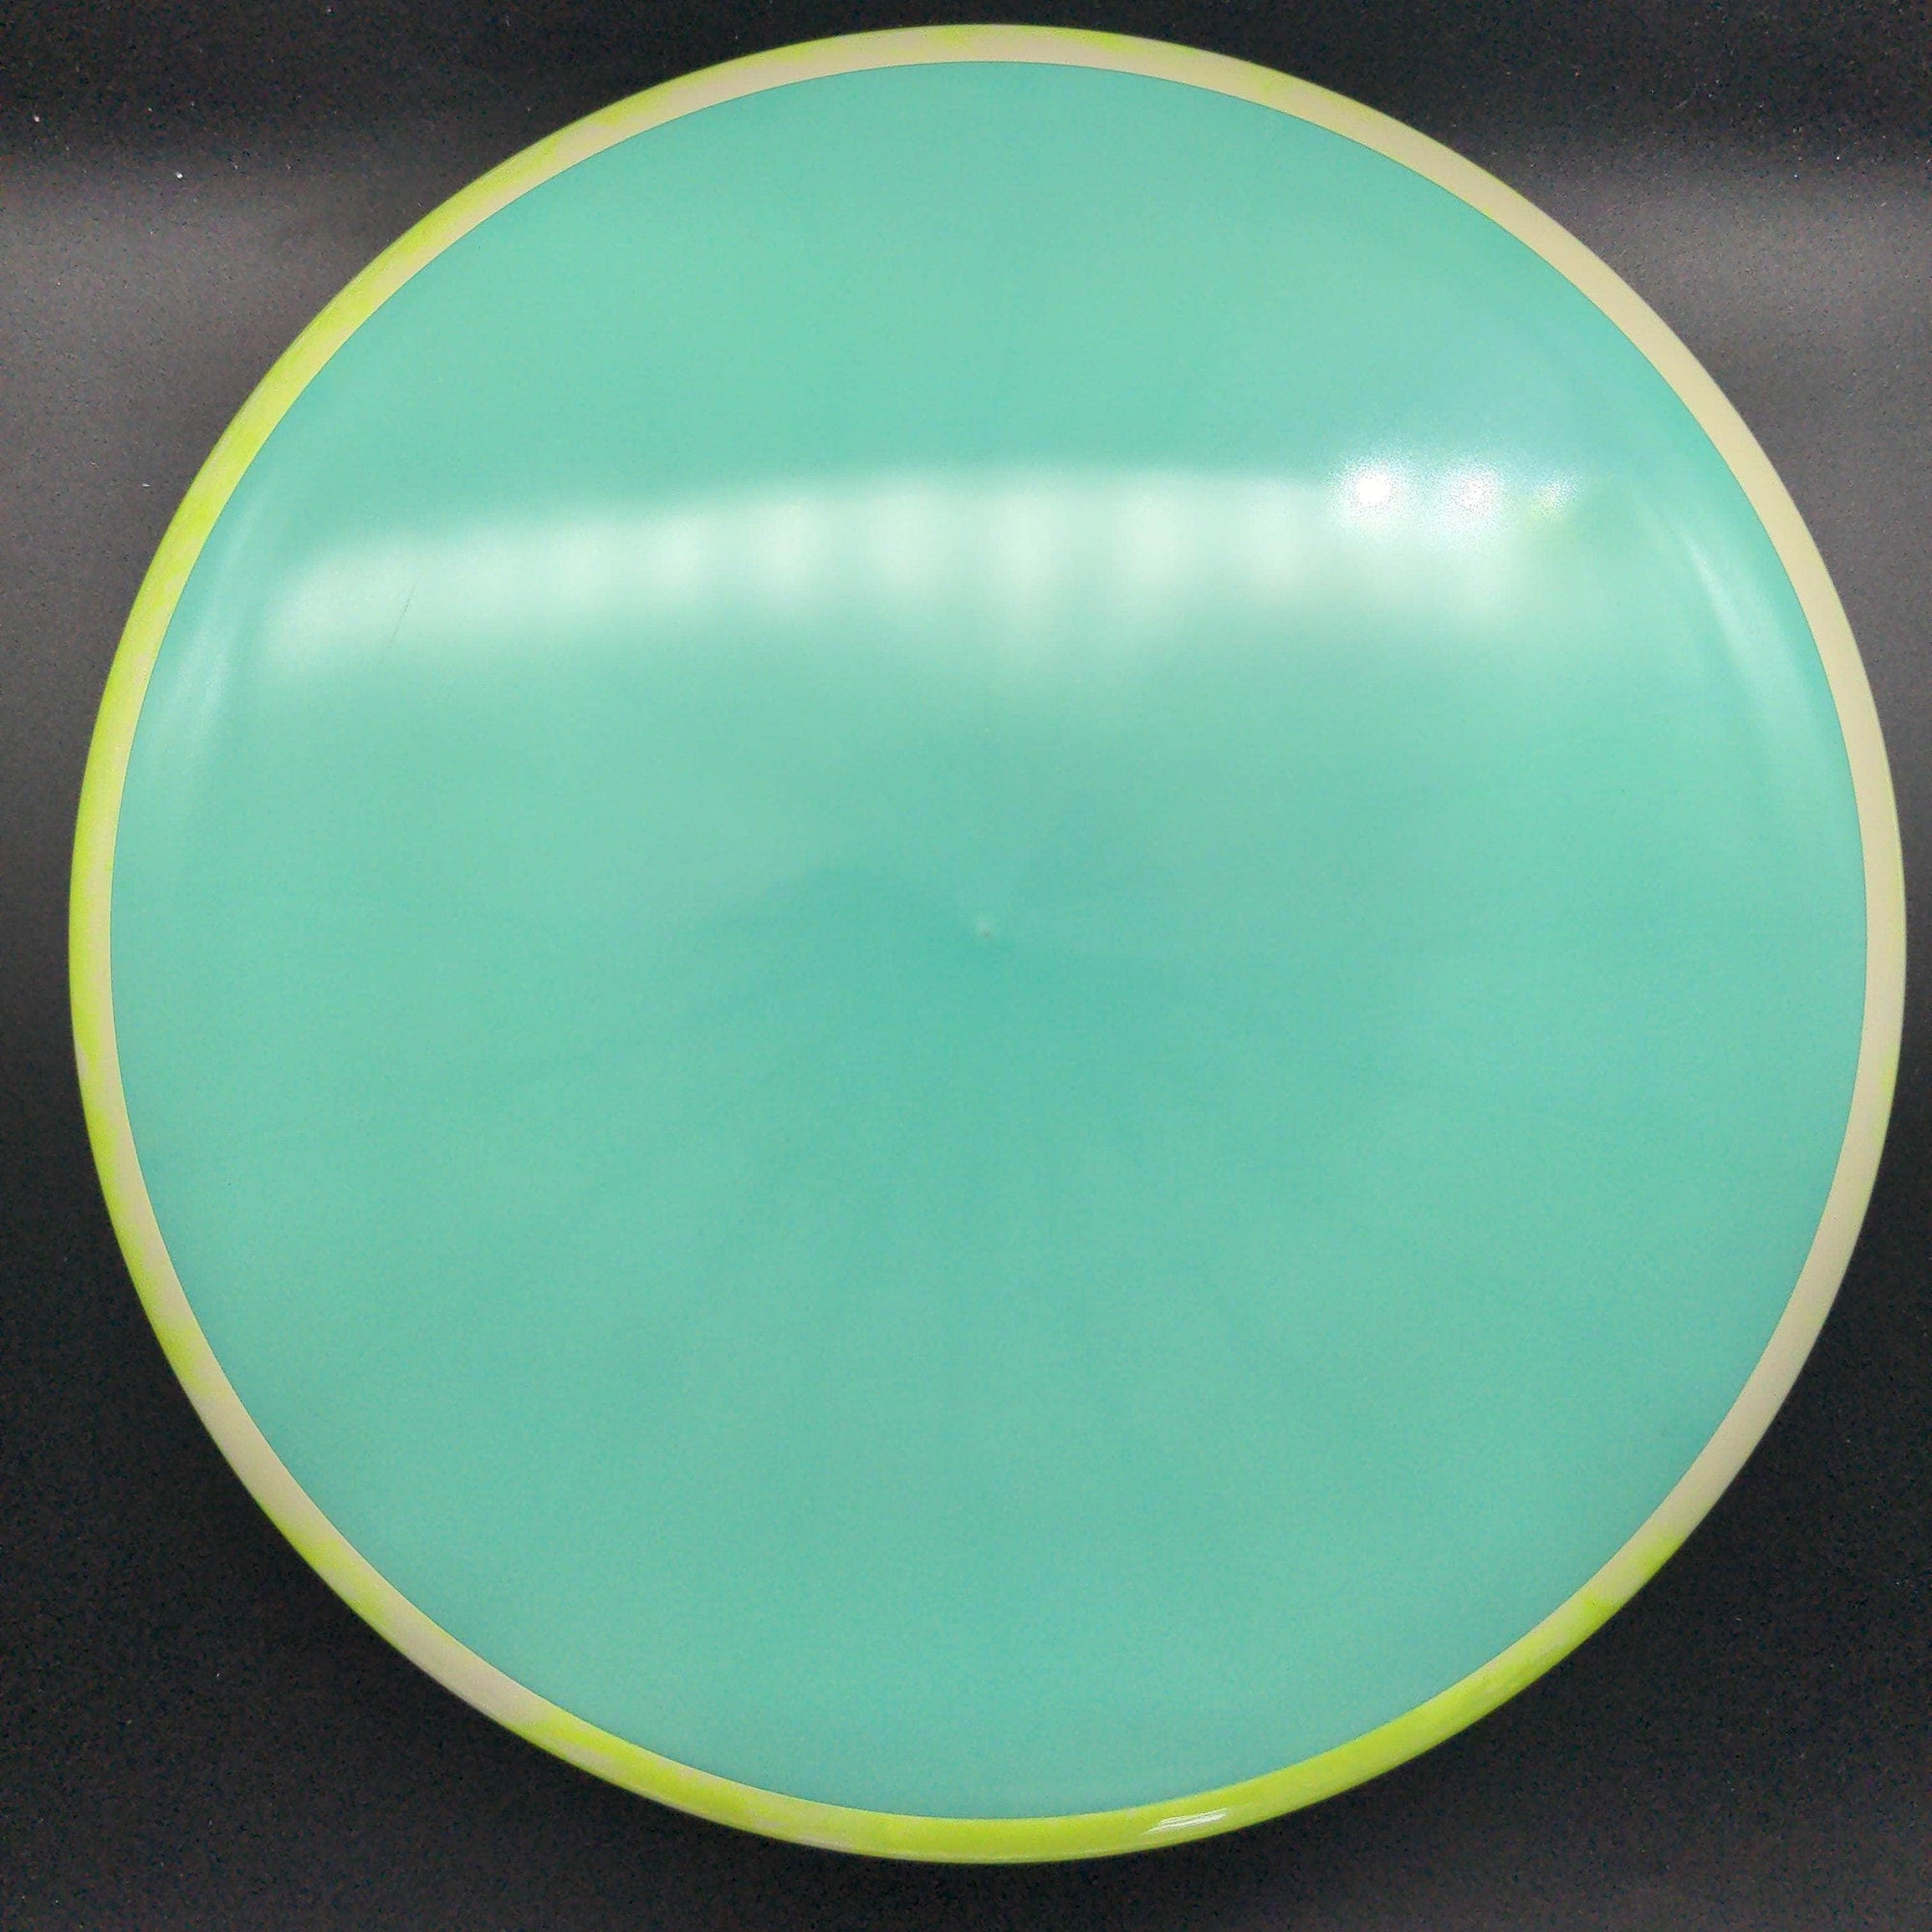 MVP Mid Range Green/White Swirl Rim Teal Blank Plate 177g Hex, Fission Plastic,